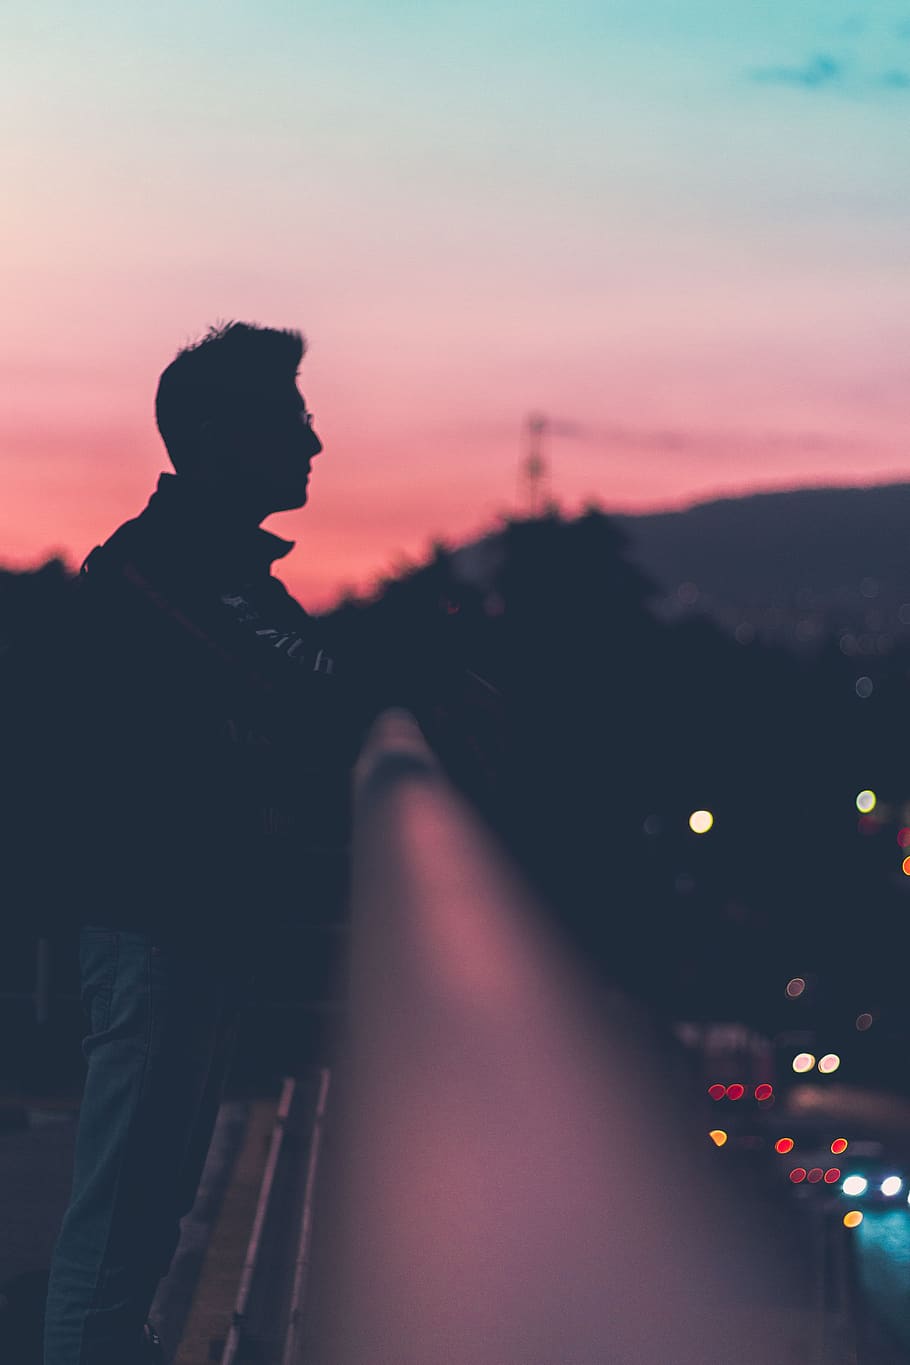 HD wallpaper: people, man, guy, standing, alone, dark, sunset